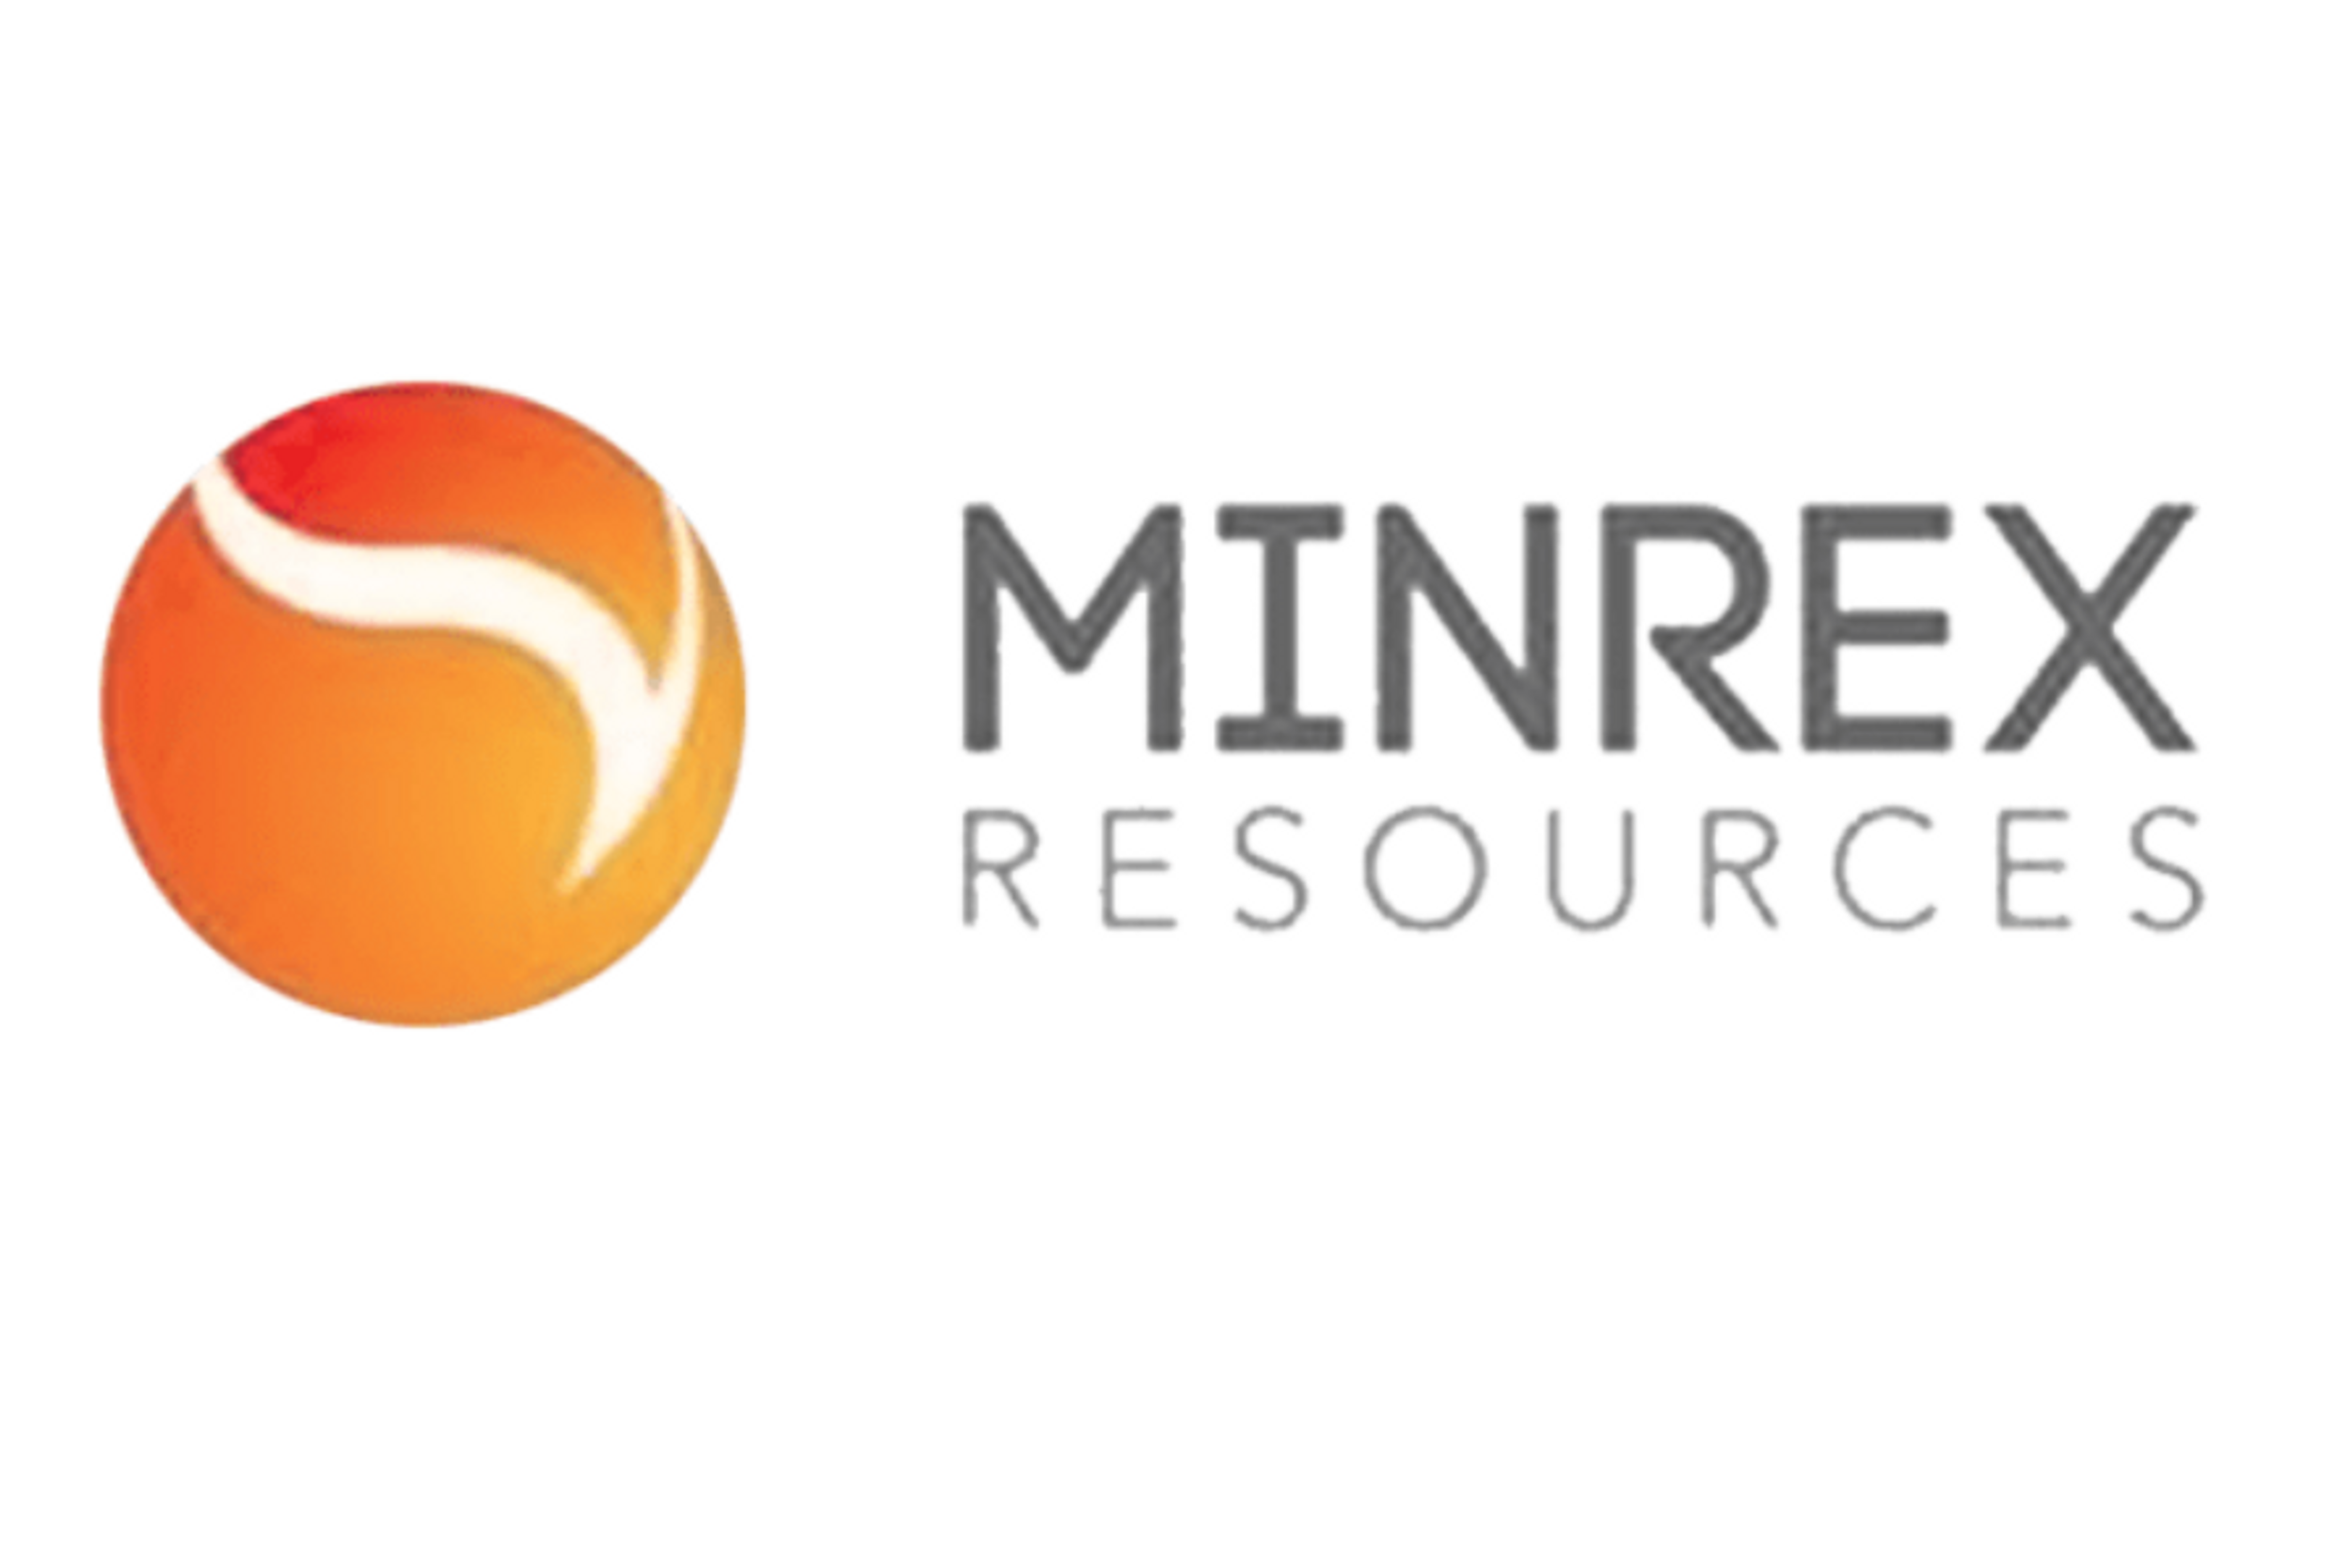 Spodumene Discovered Over 3 Minrex Pilbara Lithium Projects